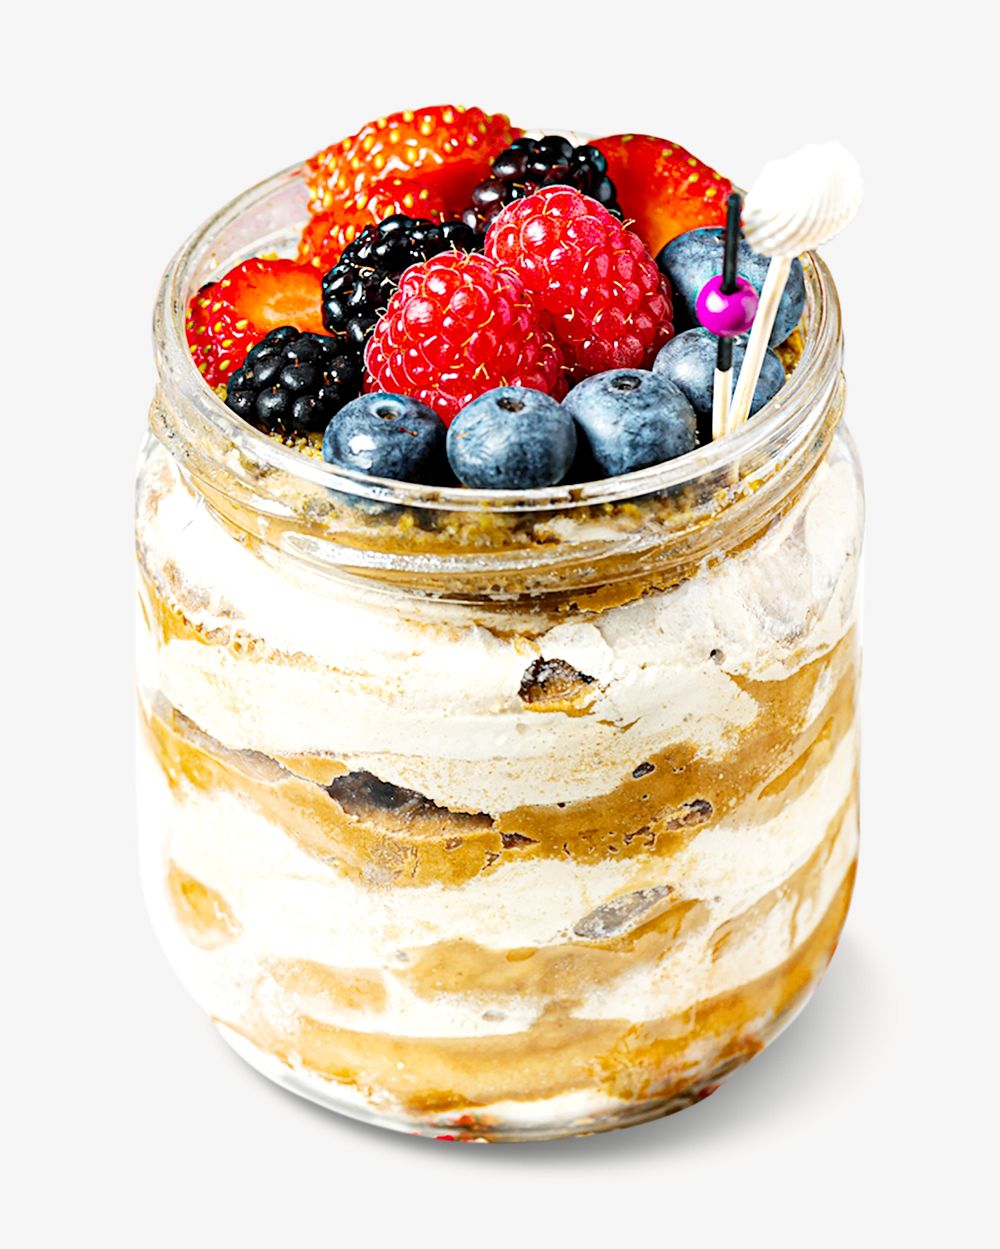 Healthy yogurt image on white